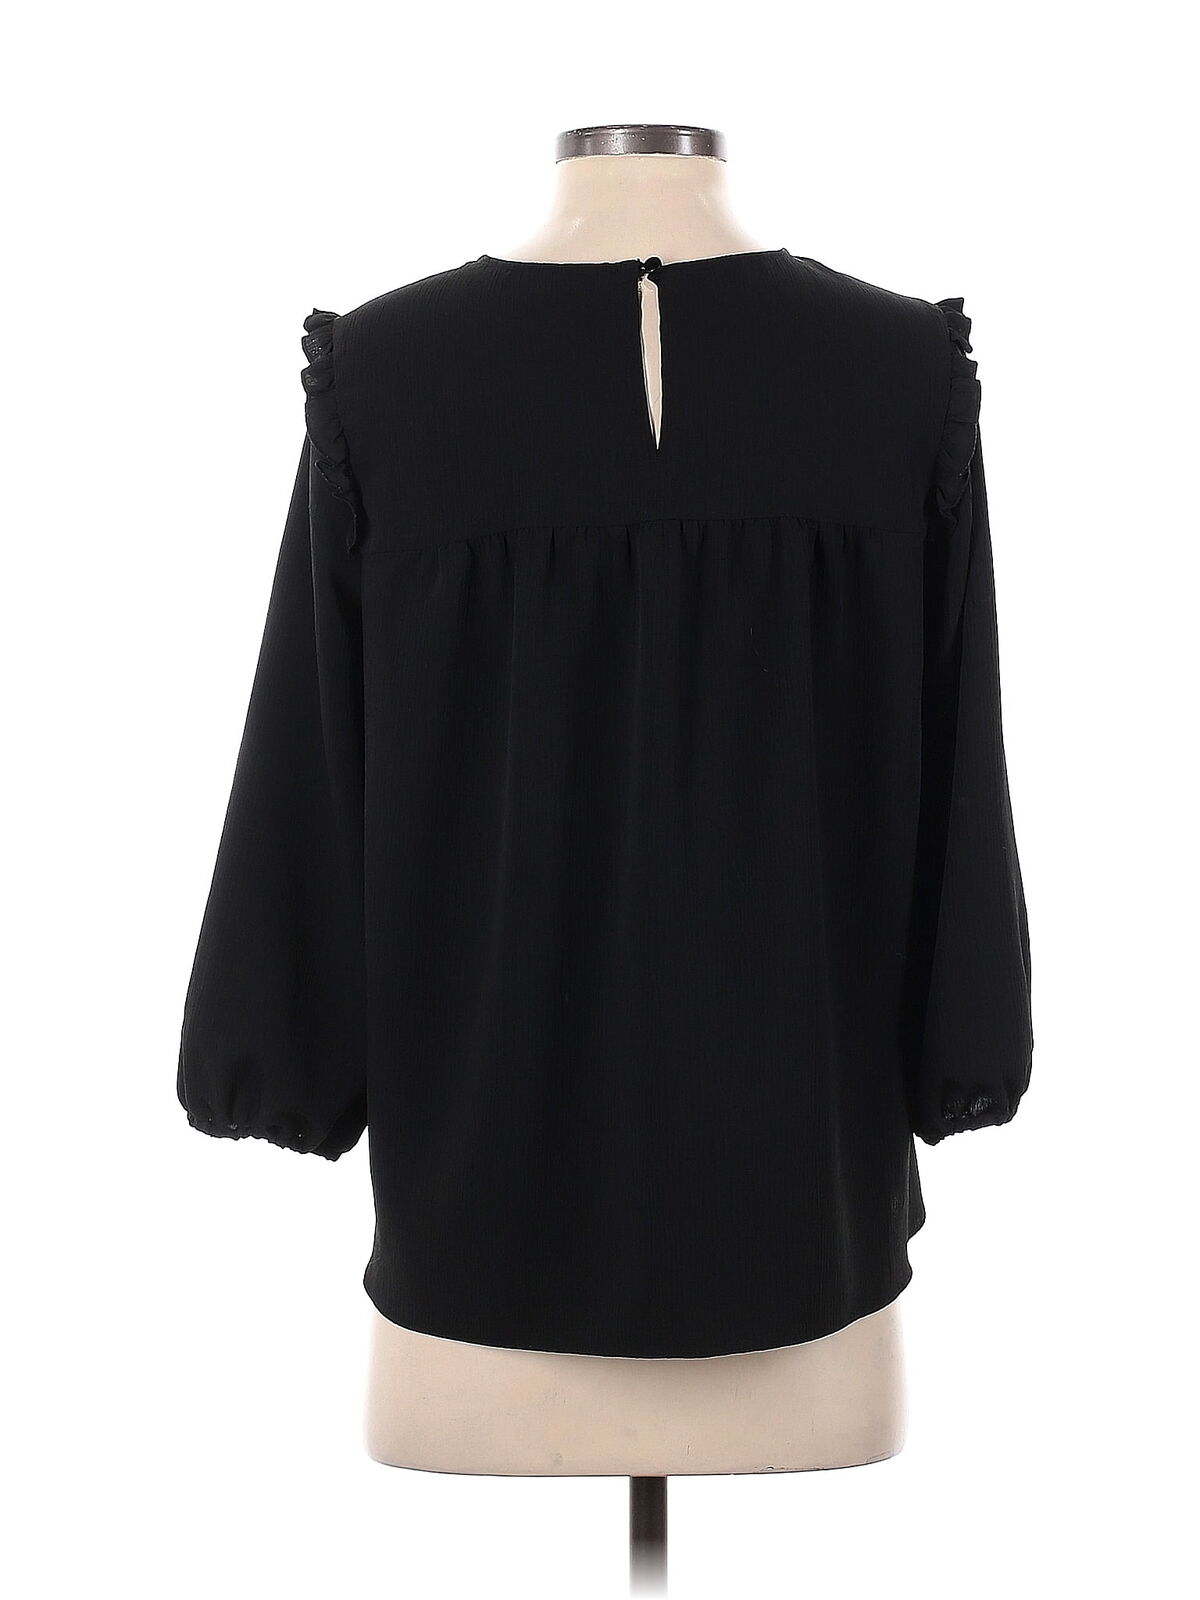 Juicy Couture Women Black Long Sleeve Blouse S - image 2